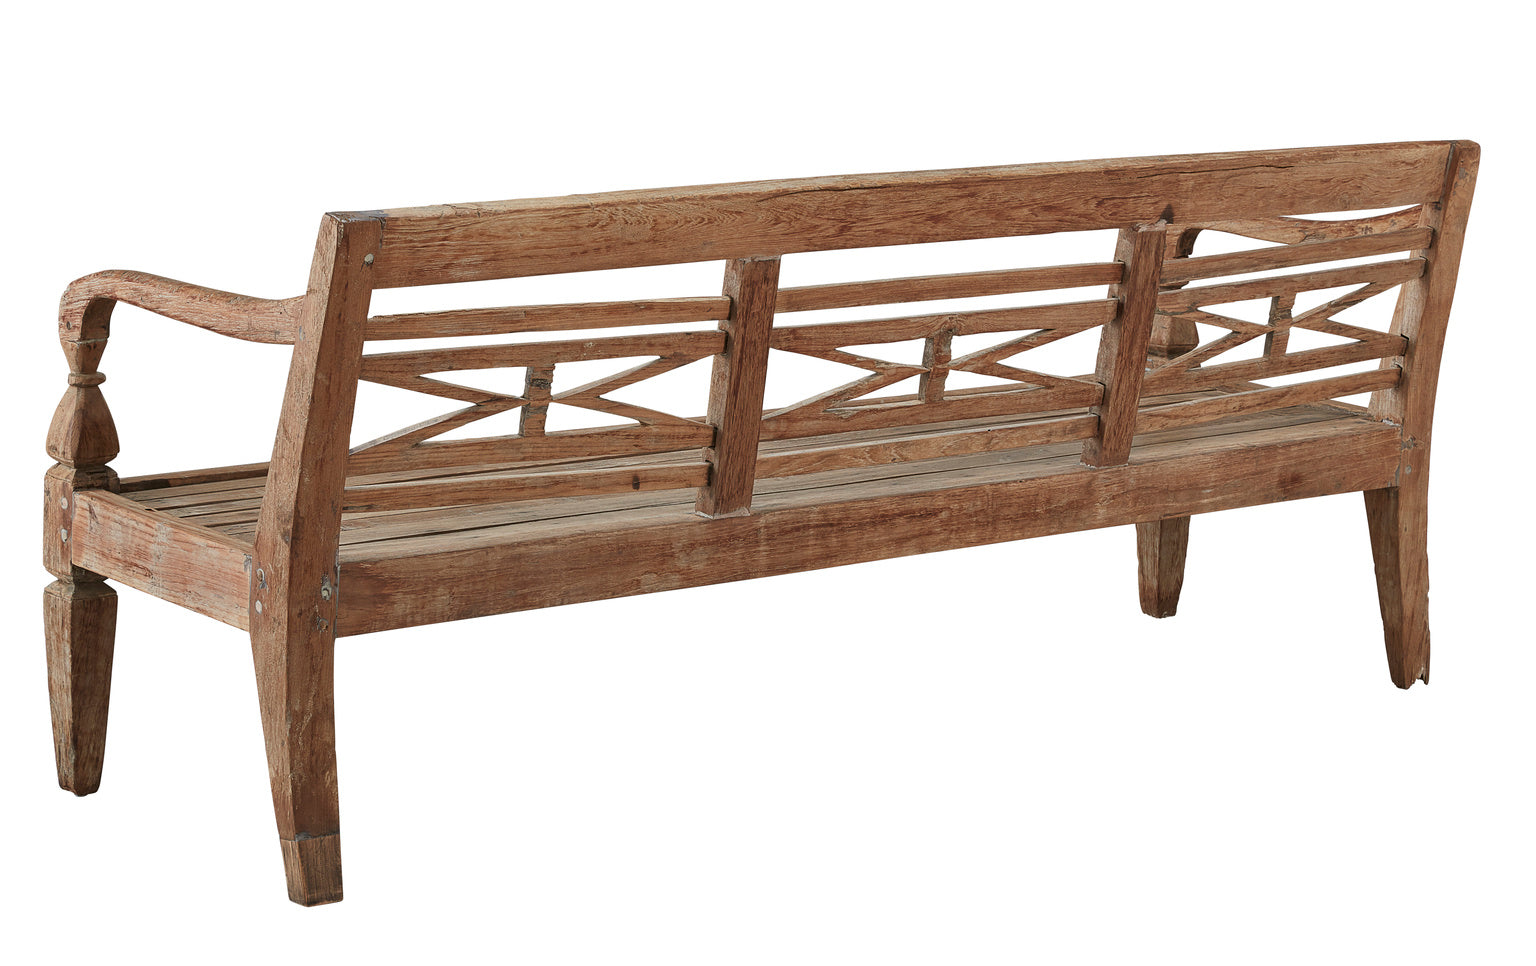 restoration hardware Teak Wood outdoor bench for sale, English Outdoor Wooden Bench for sale